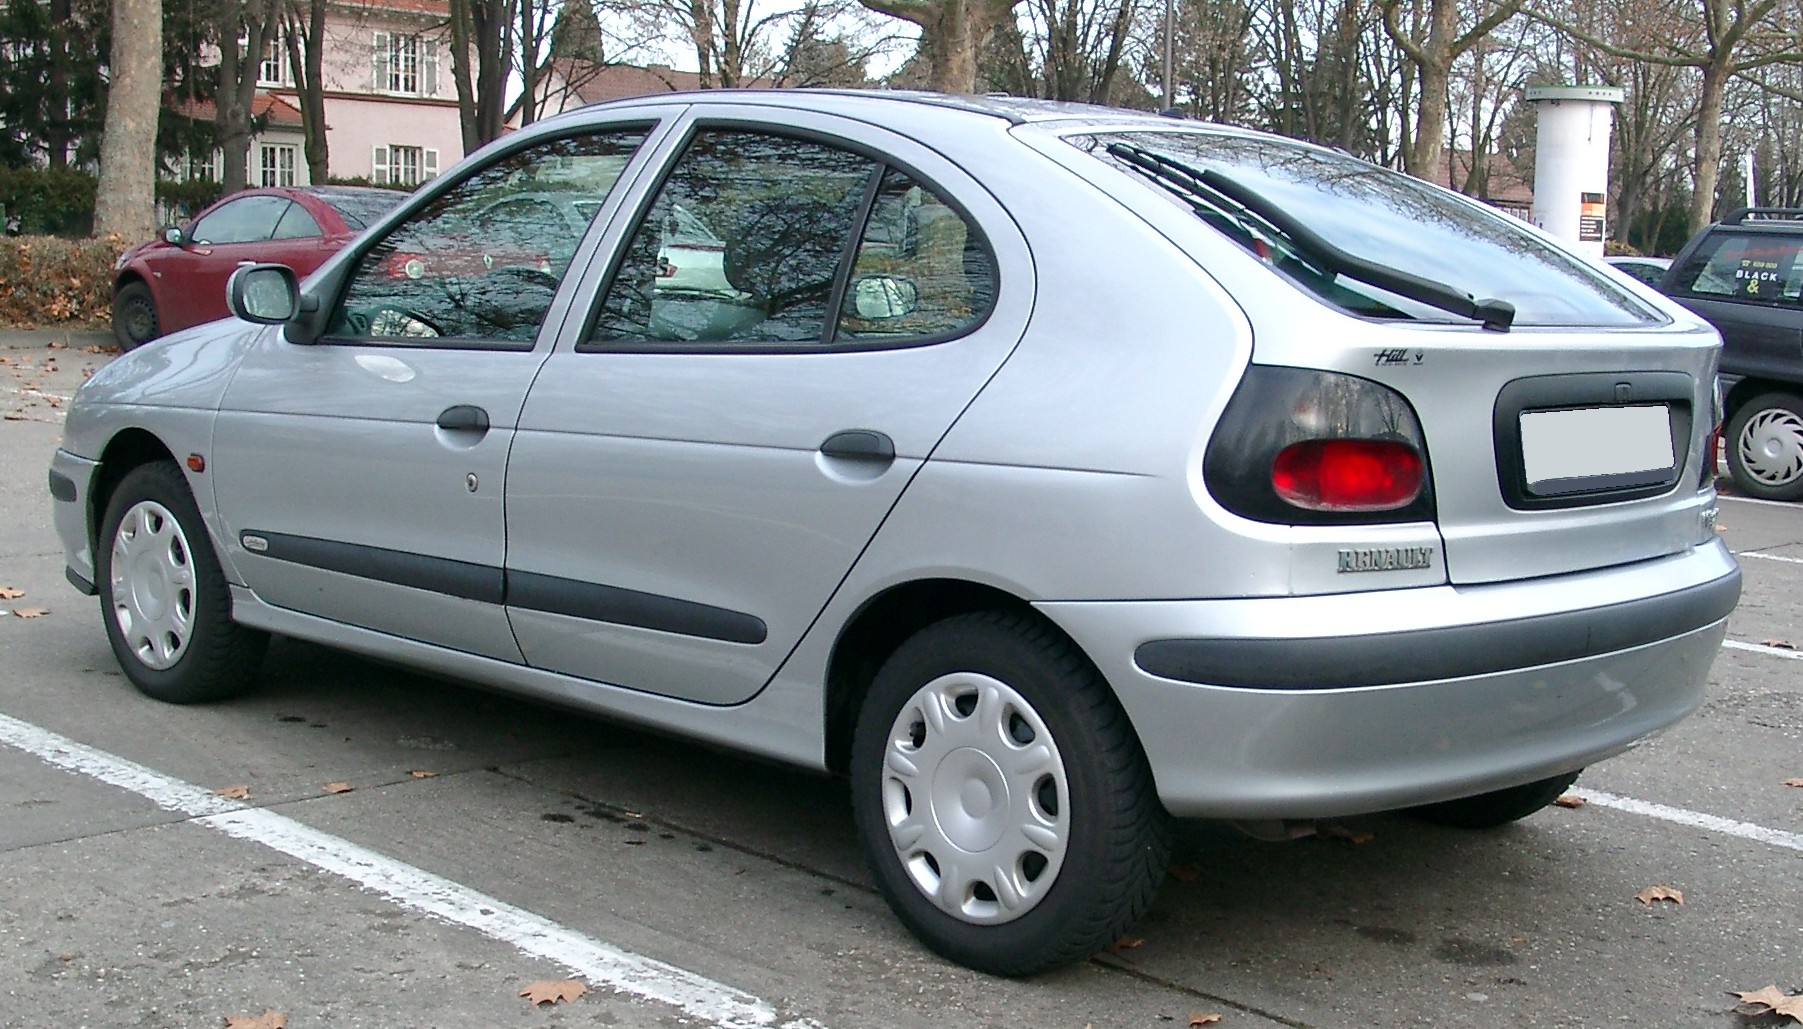 File:Renault Mégane III 20090801 front.JPG - Wikipedia